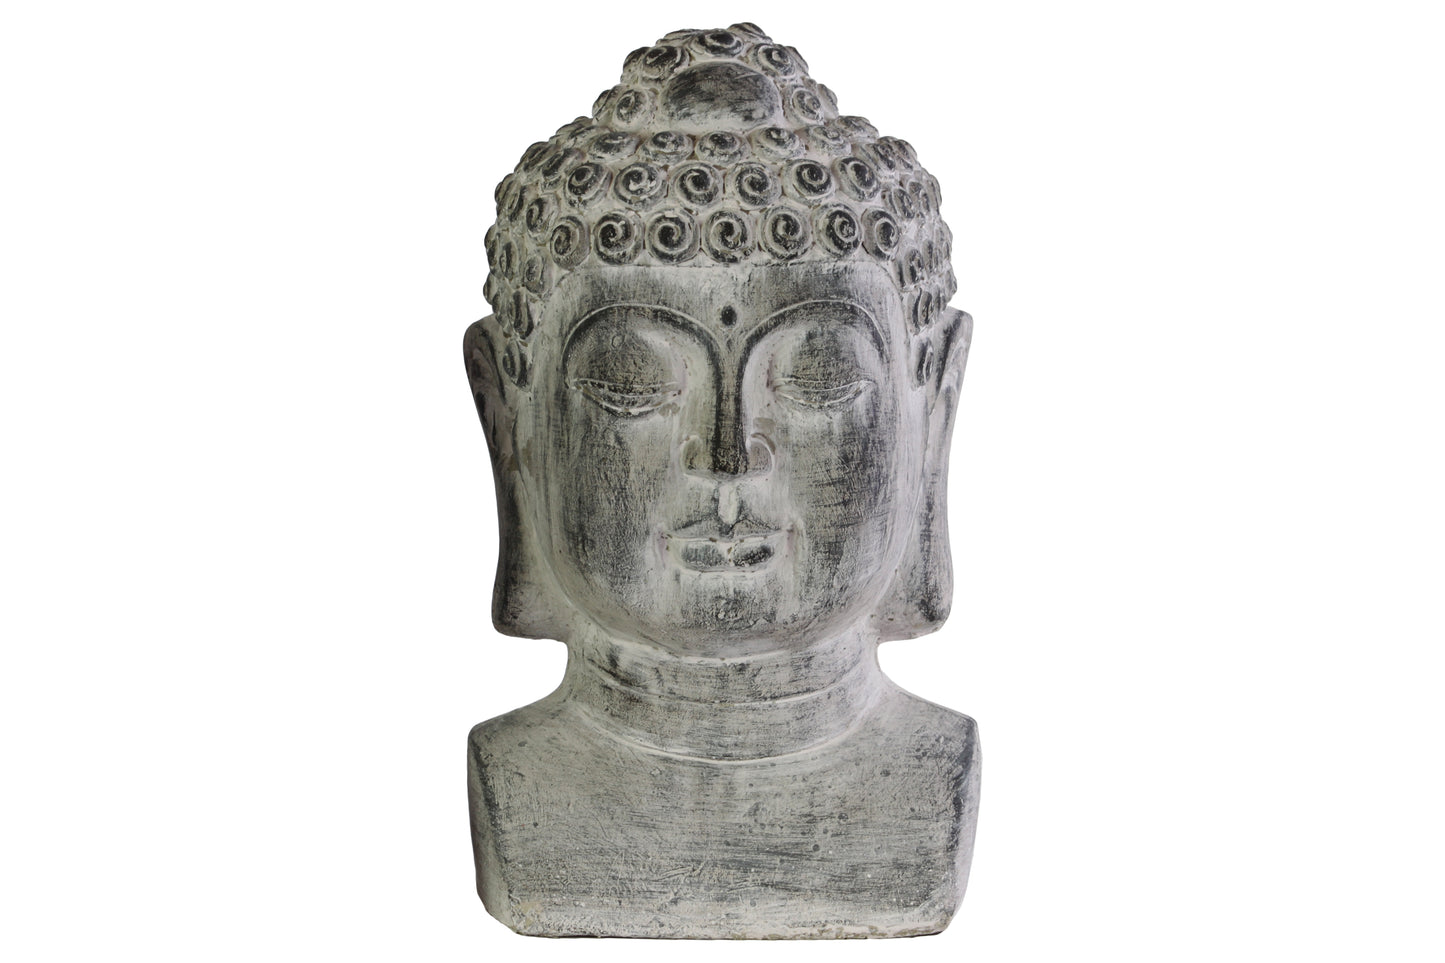 10" Cement Sitting Budhha Figurine in Abhaya Mudra Meditating Position